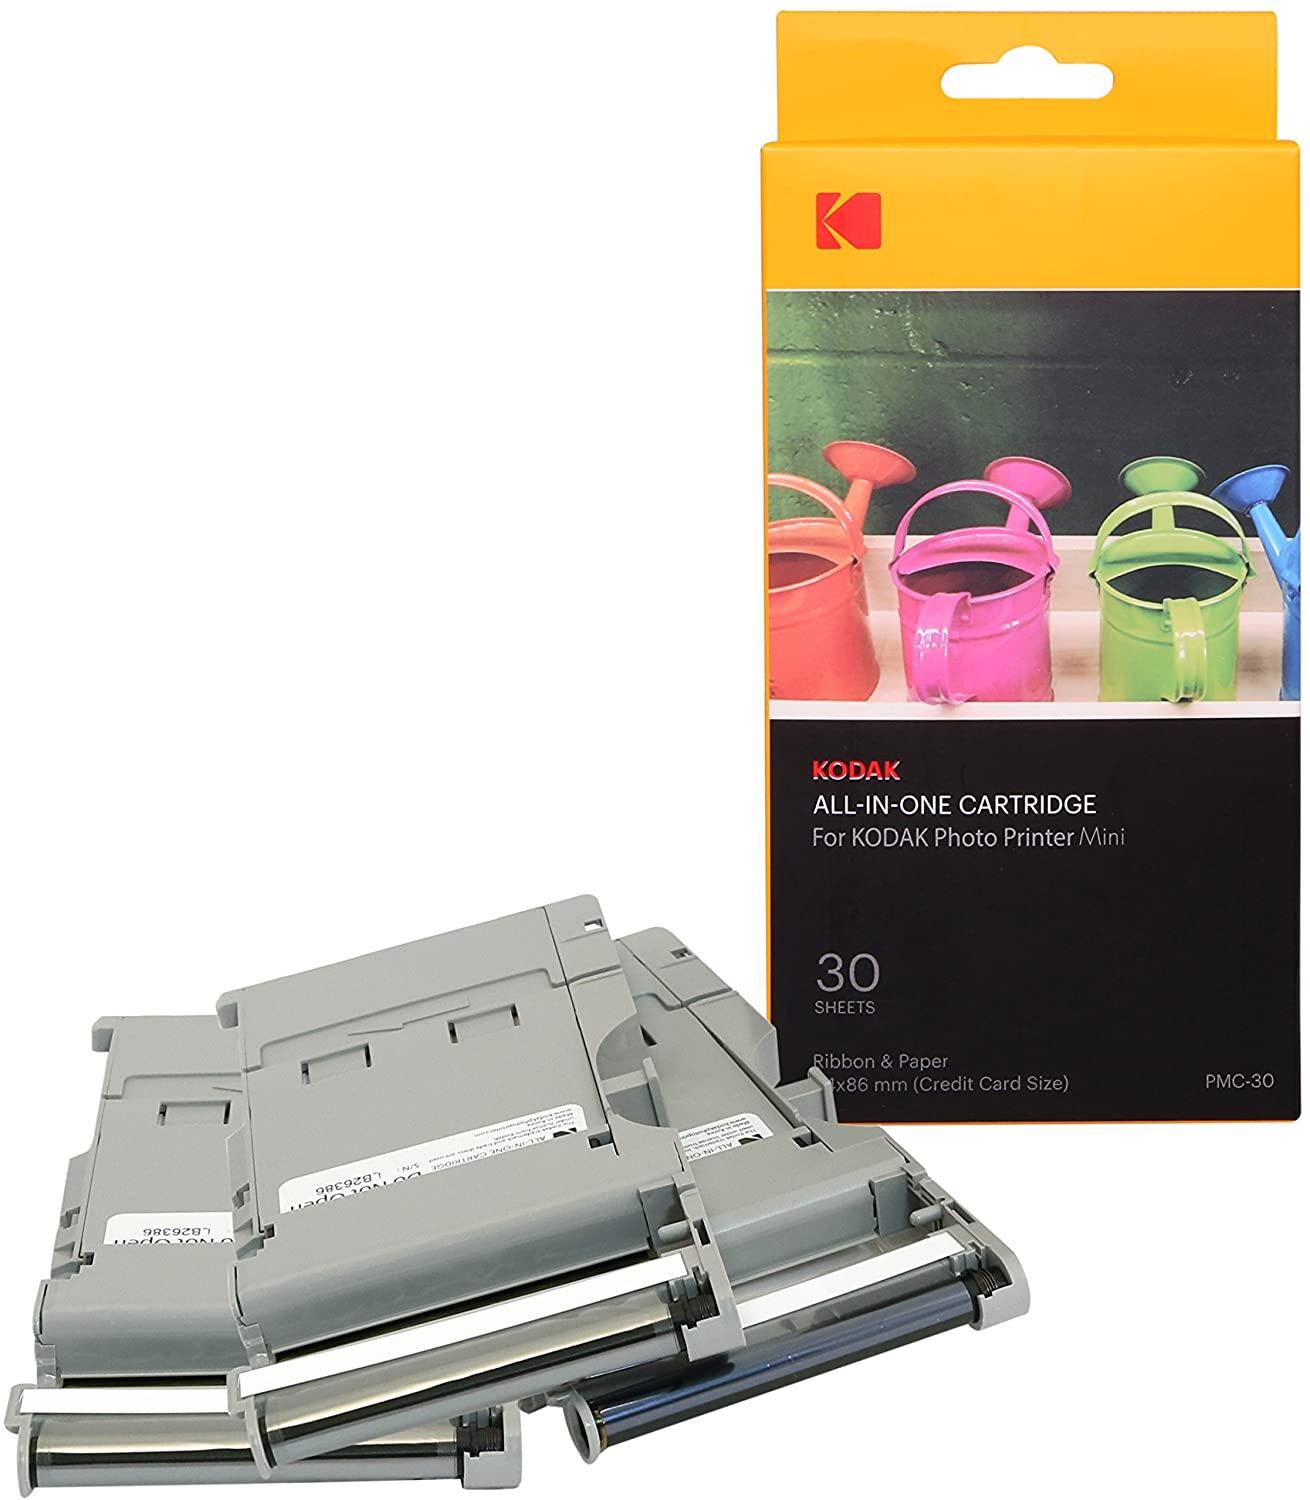 Kodak All-In-One Cartridge For Kodak Photo Printer Mini